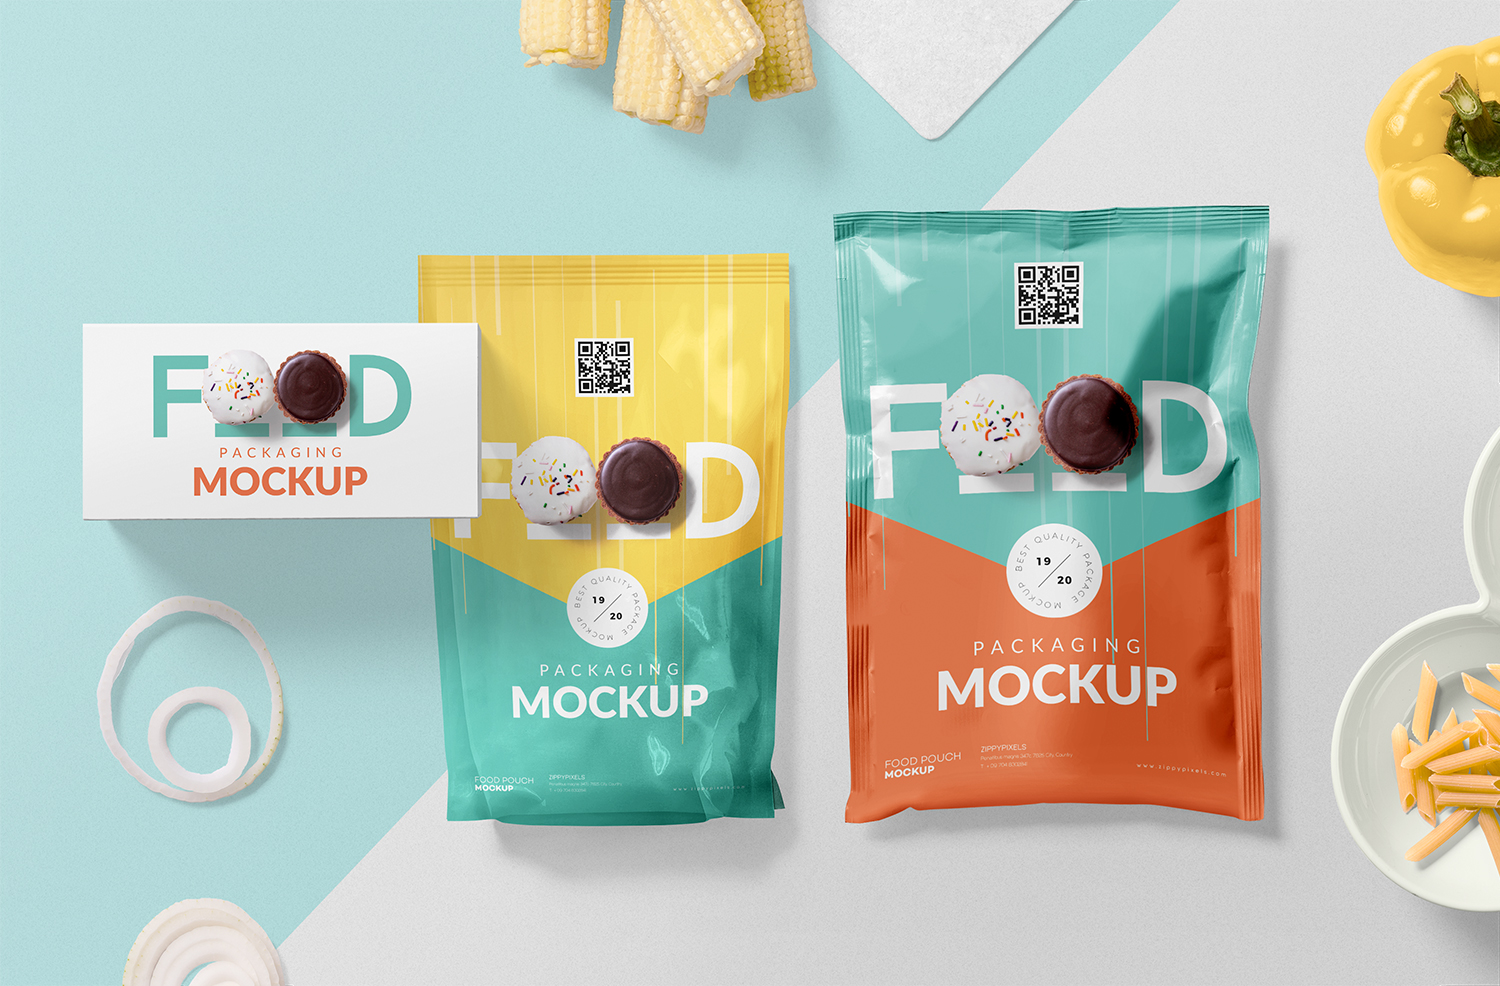 Free Food Packaging Mockup PSD | Free Mockup